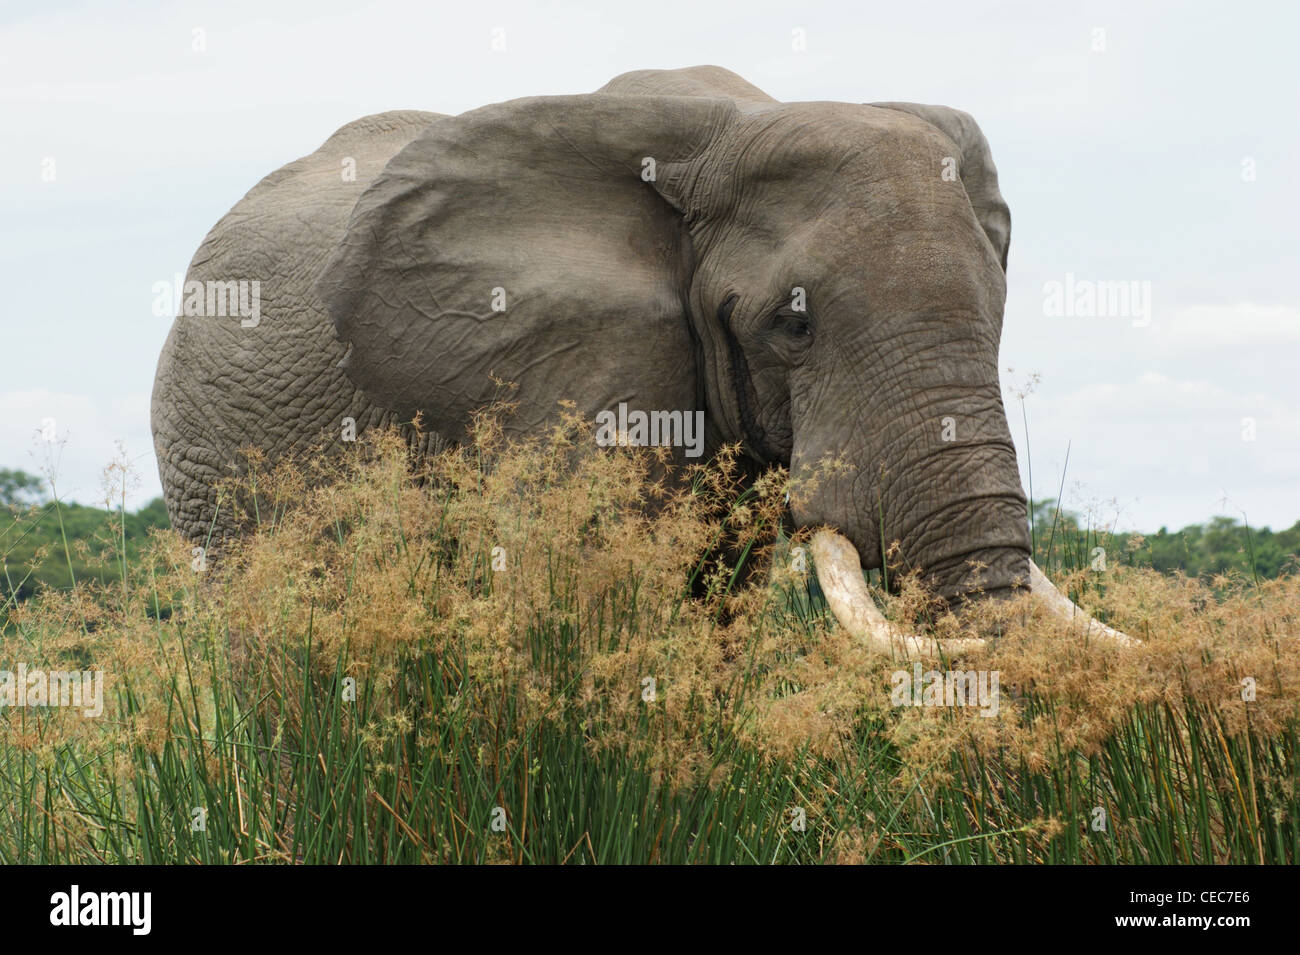 a elephant in Uganda (Africa) Stock Photo